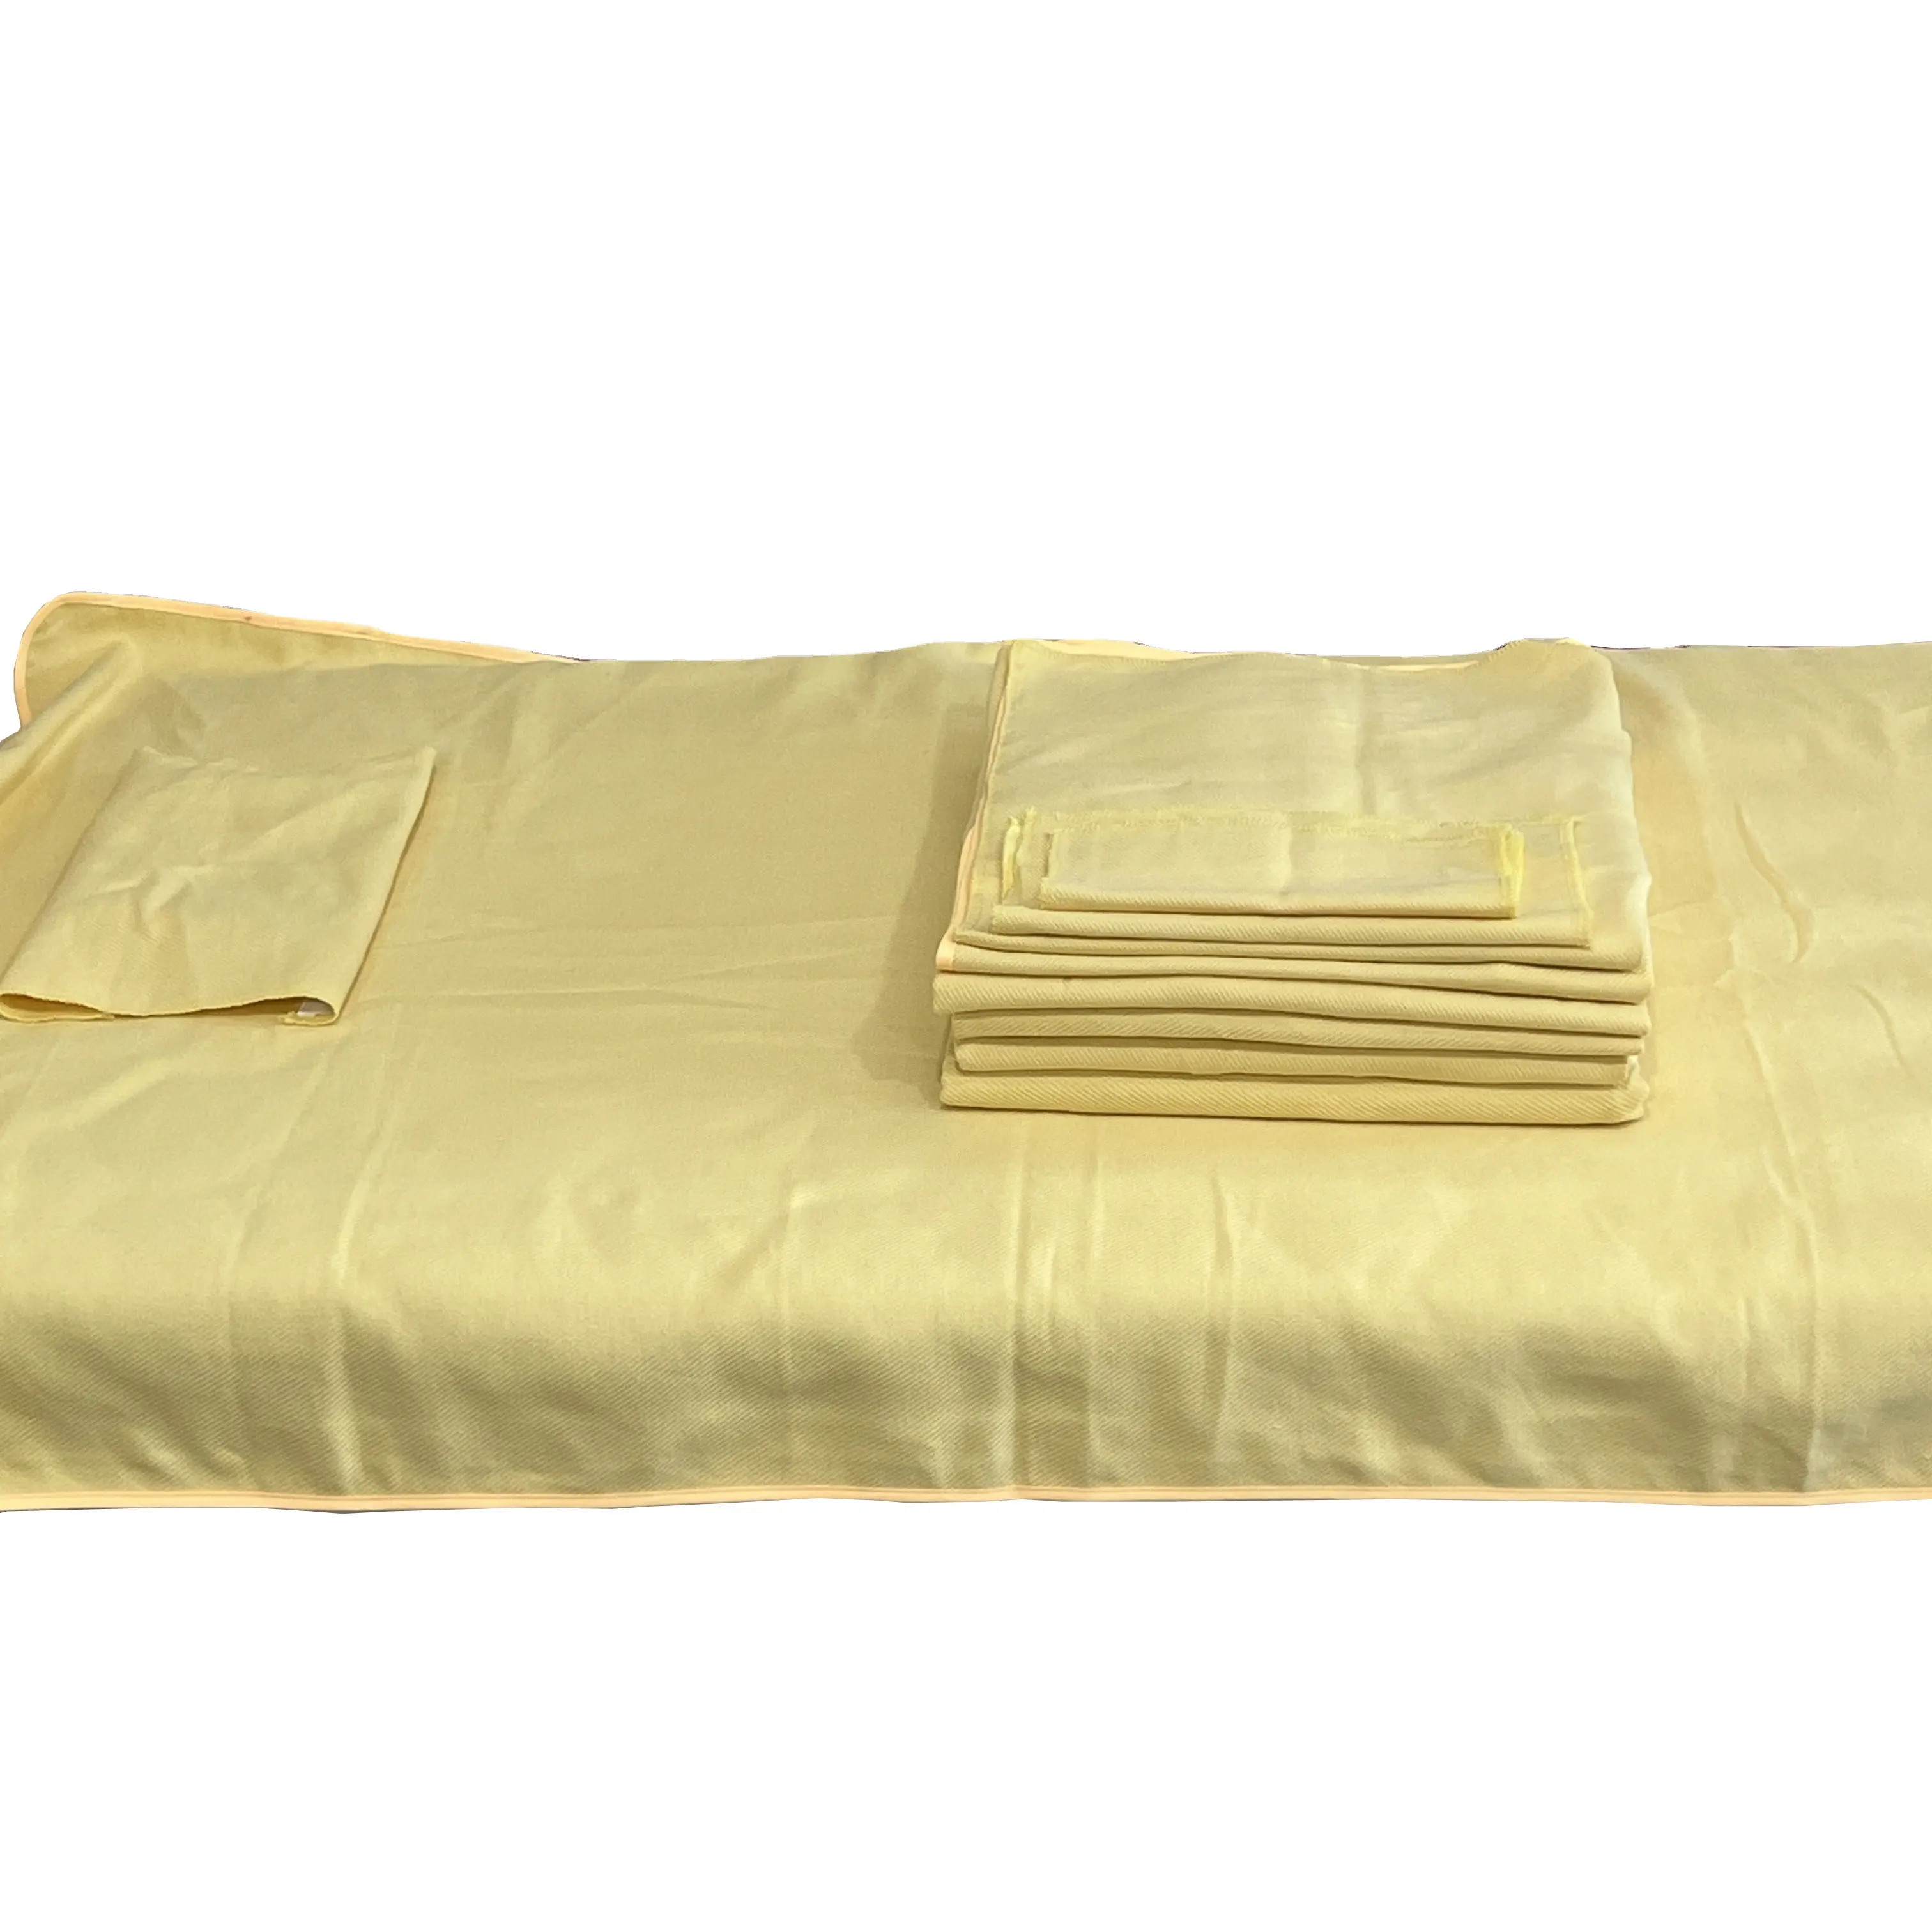 WINATURE kotak hadiah disesuaikan kualitas tinggi 100% katun bayi Set tempat tidur nyaman anak-anak 12 buah sprei kantong tidur tempat tidur bayi